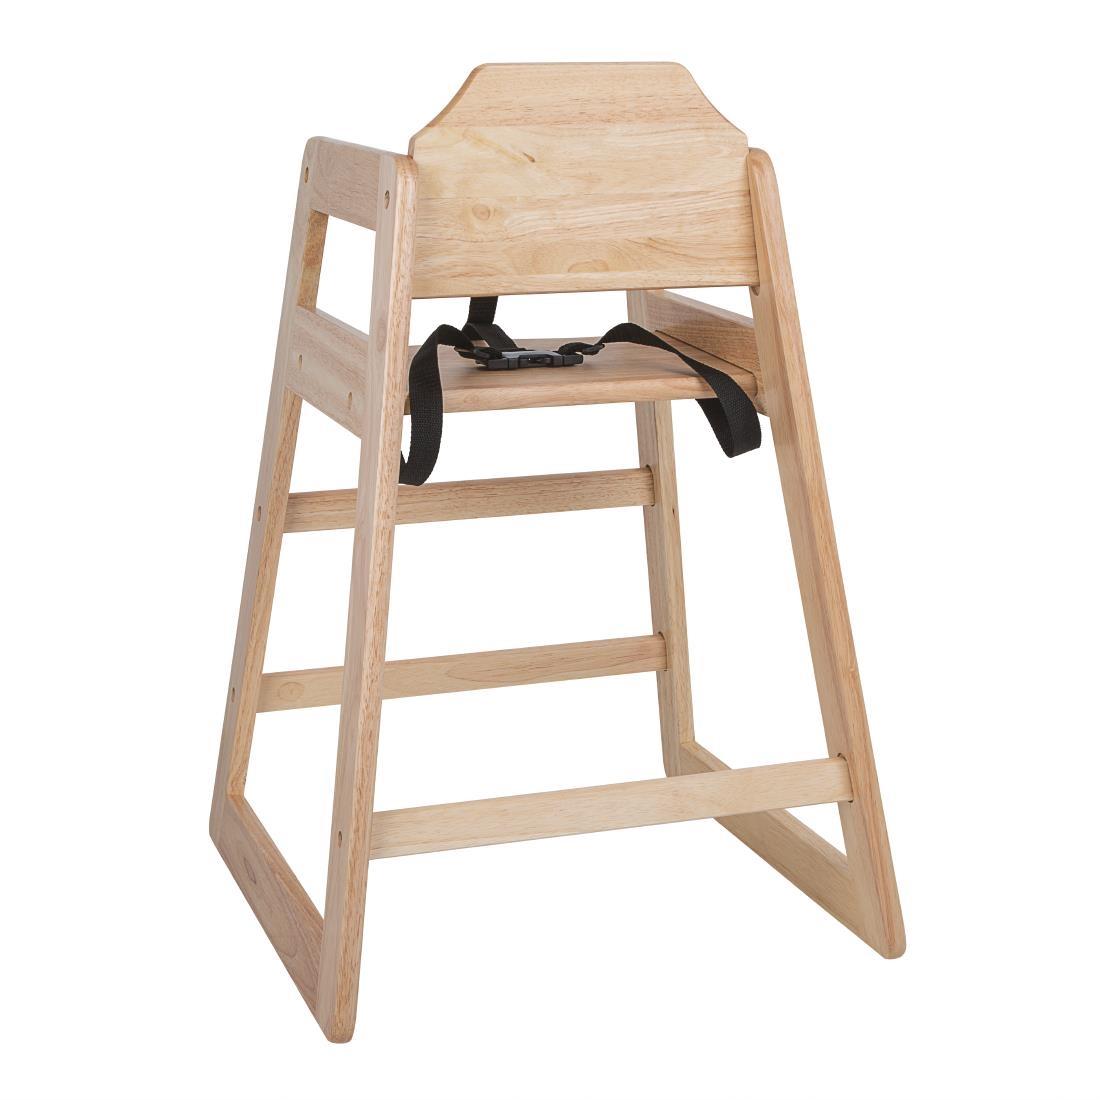 Bolero Wooden Highchair Natural Finish - DL900  - 6